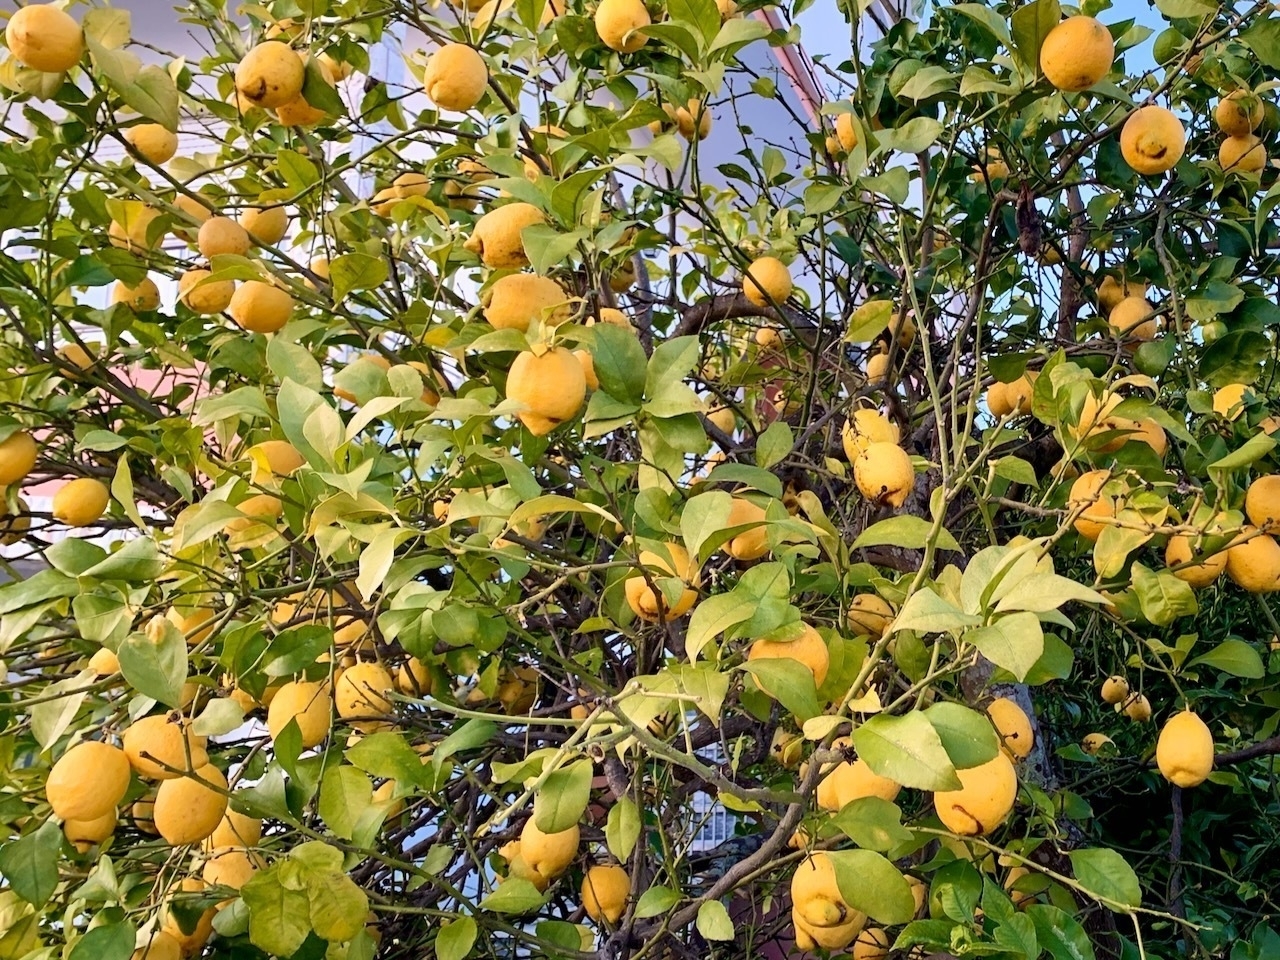 A lemon tree laden with ripe, yellow lemons